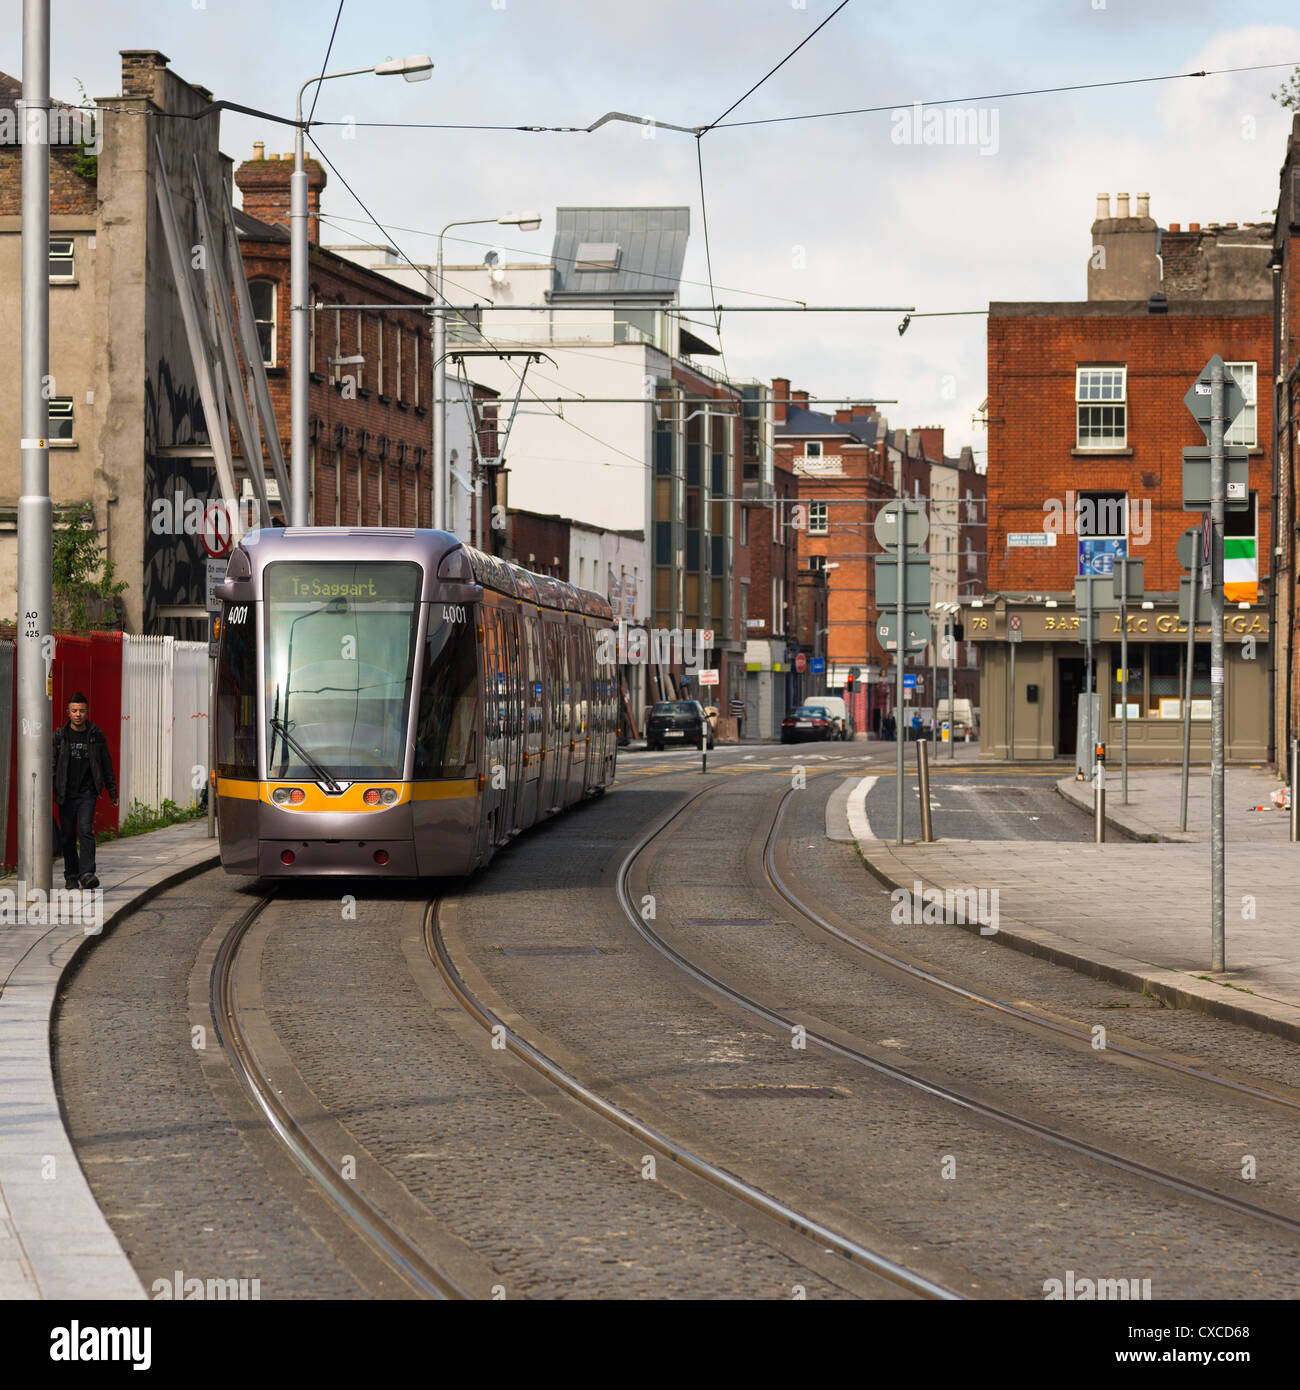 Dublin tram on the move. Republic of Ireland. Stock Photo